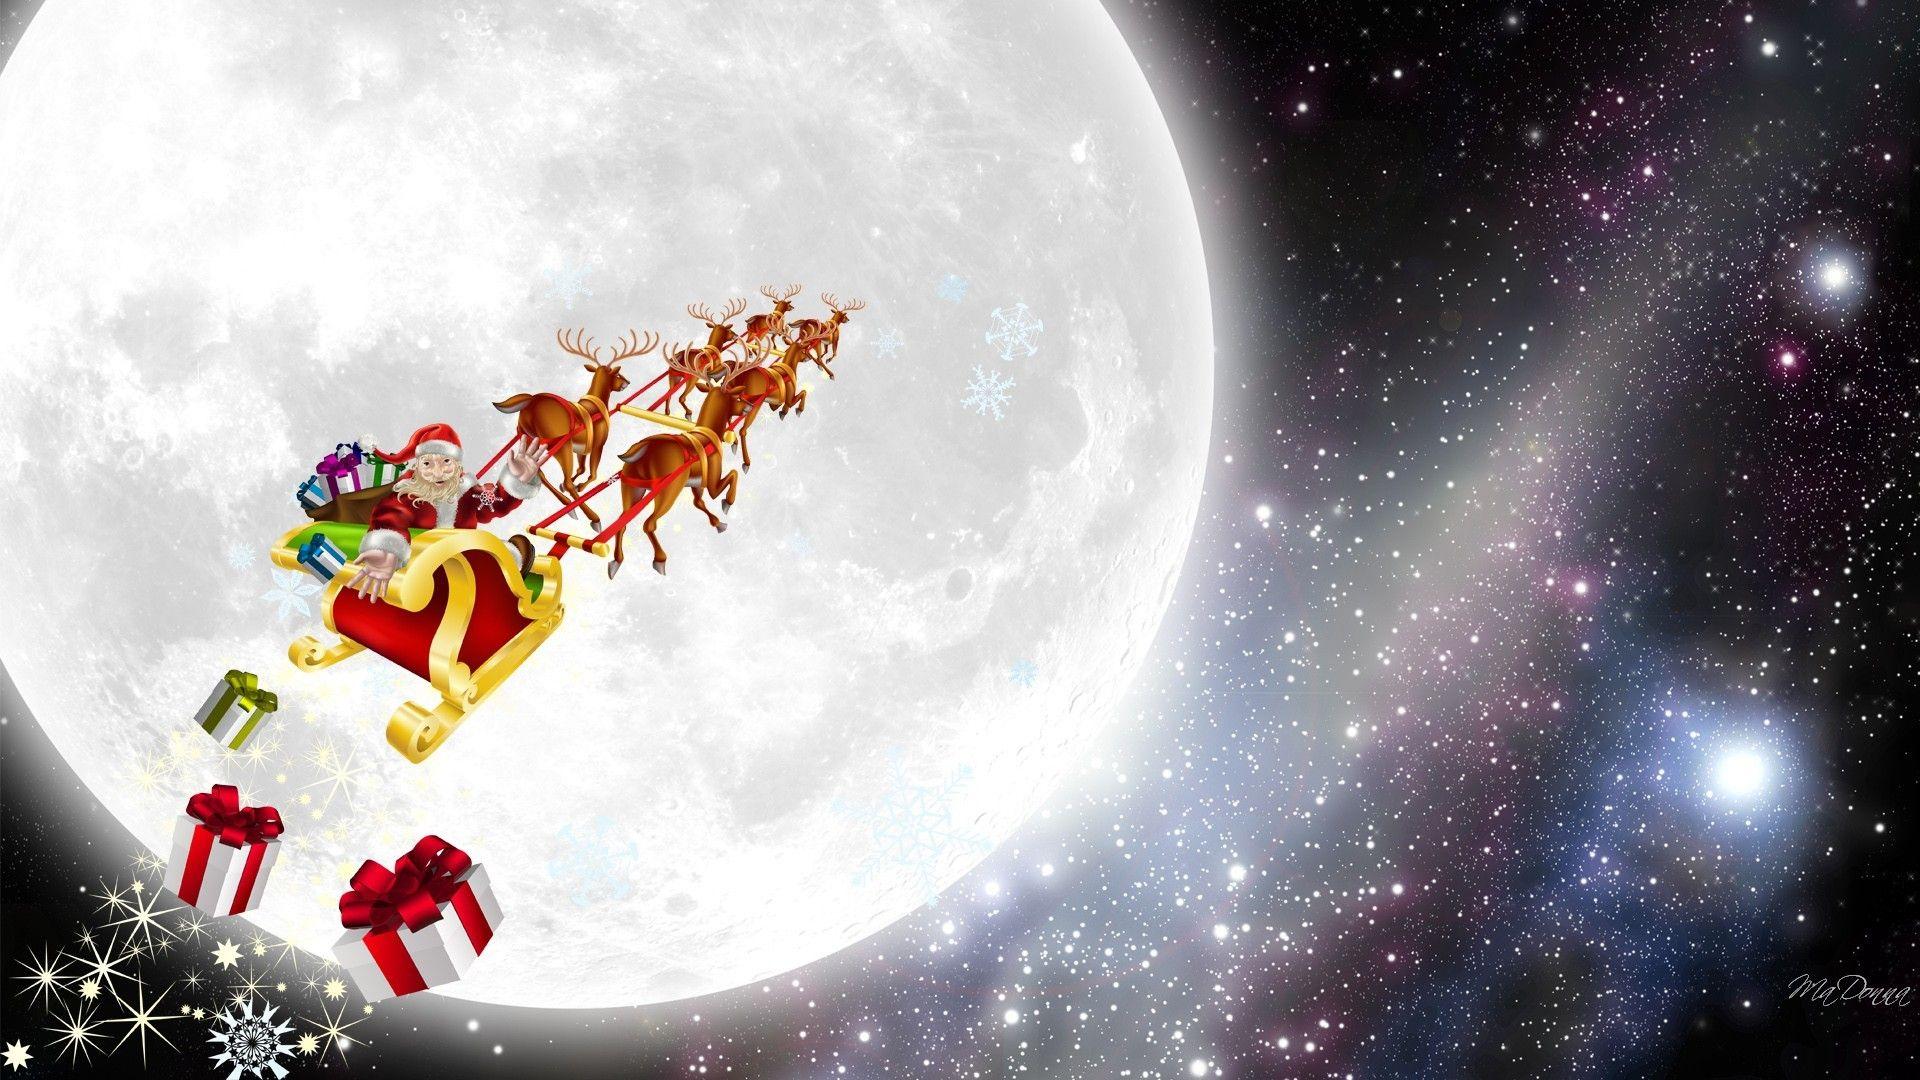 Winter Christmas Sleigh Eve Moon Reindeers Spirit Dropping Sky Gifts